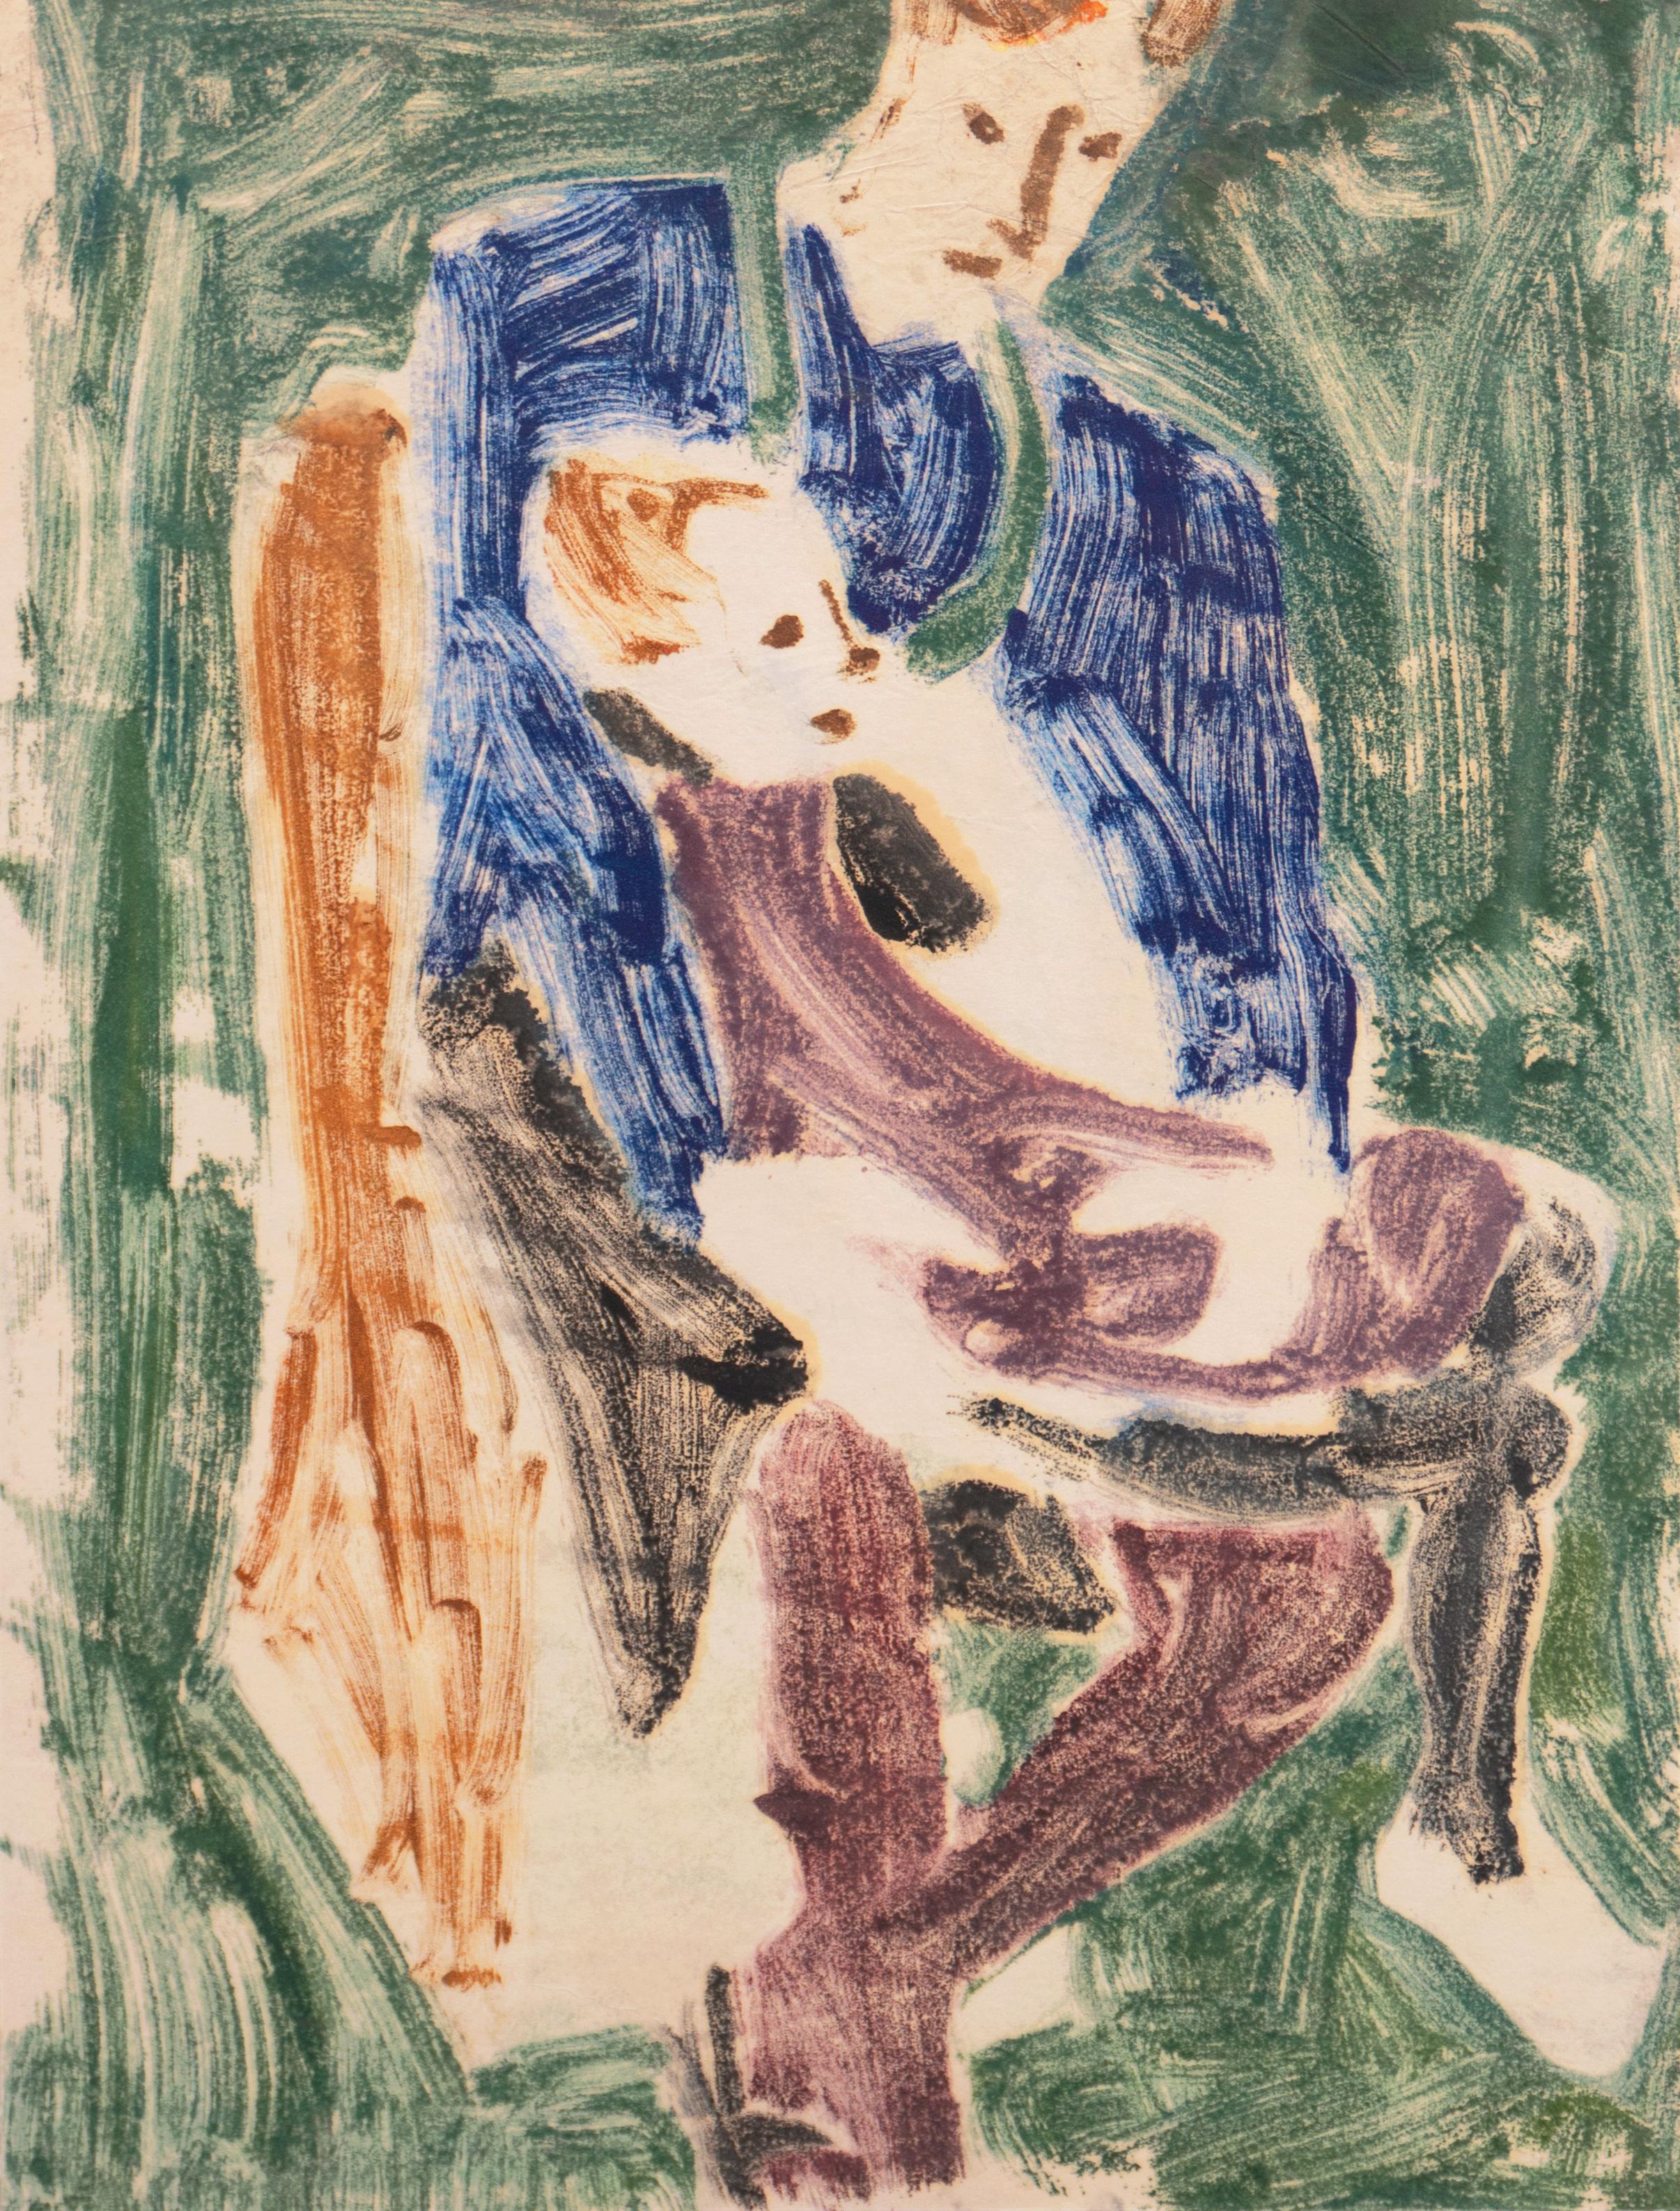 Victor Di Gesu Figurative Print - 'Mother and Child', Paris, Louvre, Académie Chaumière, Carmel, LACMA, SFAA